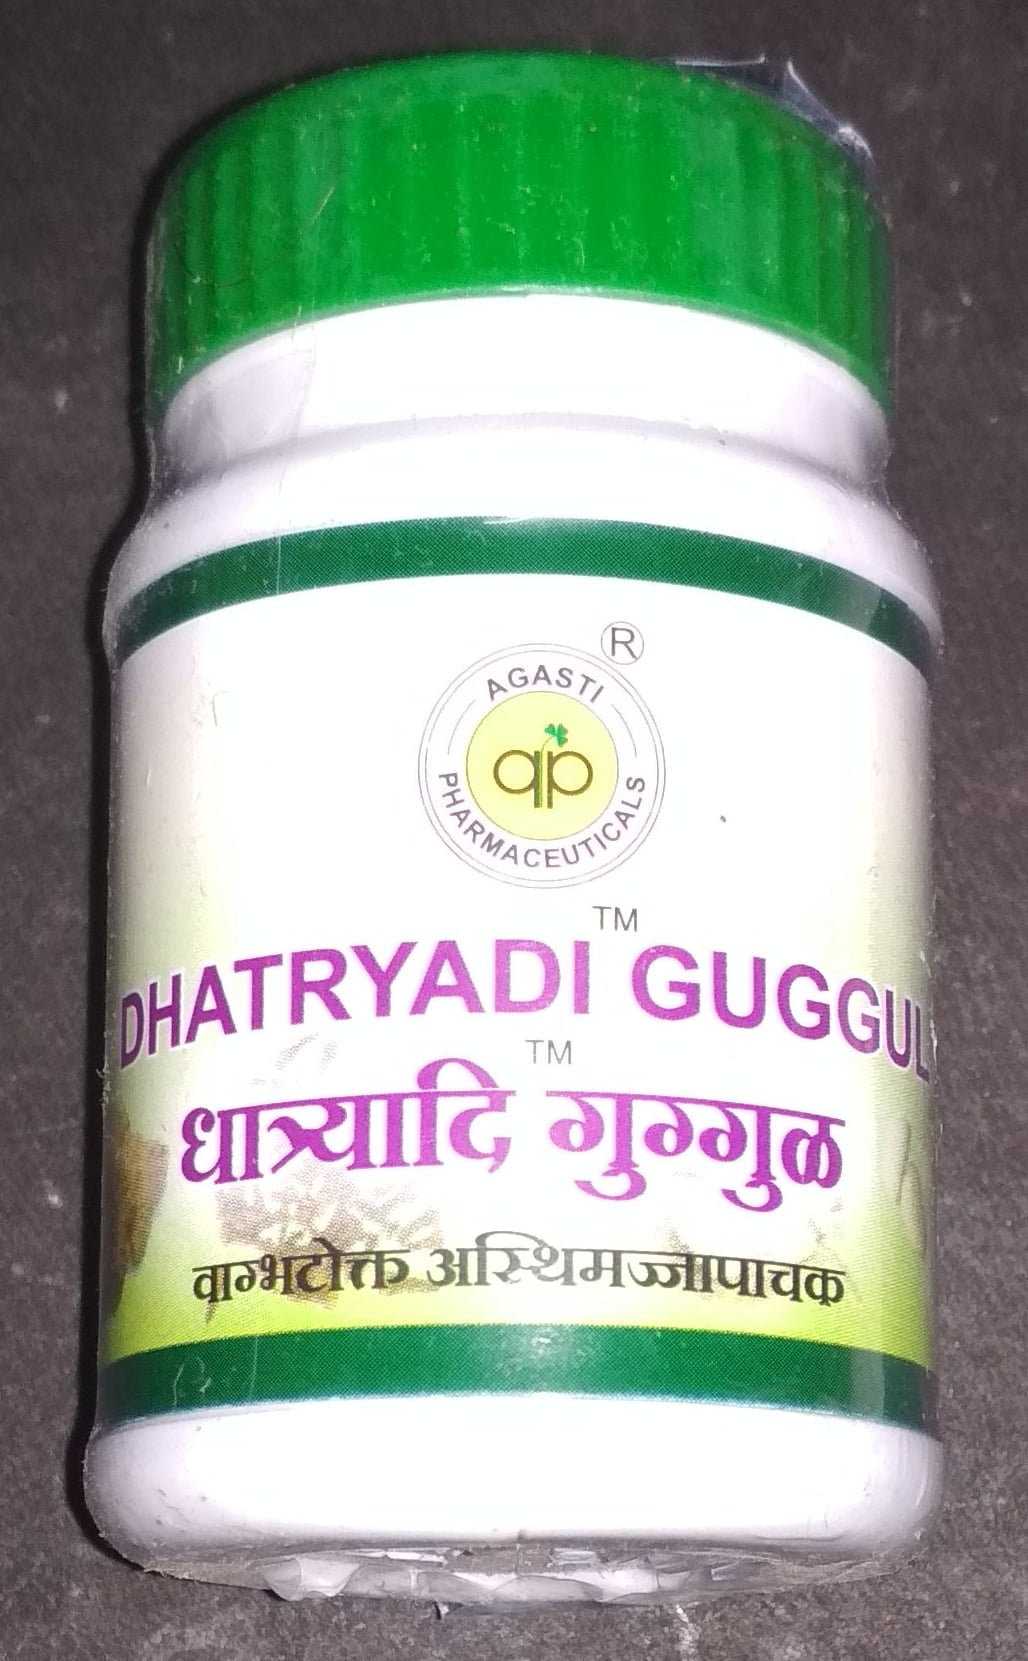 dhatryadi guggul 100gm 400 tablet upto 15% off agasti pharmaceuticals